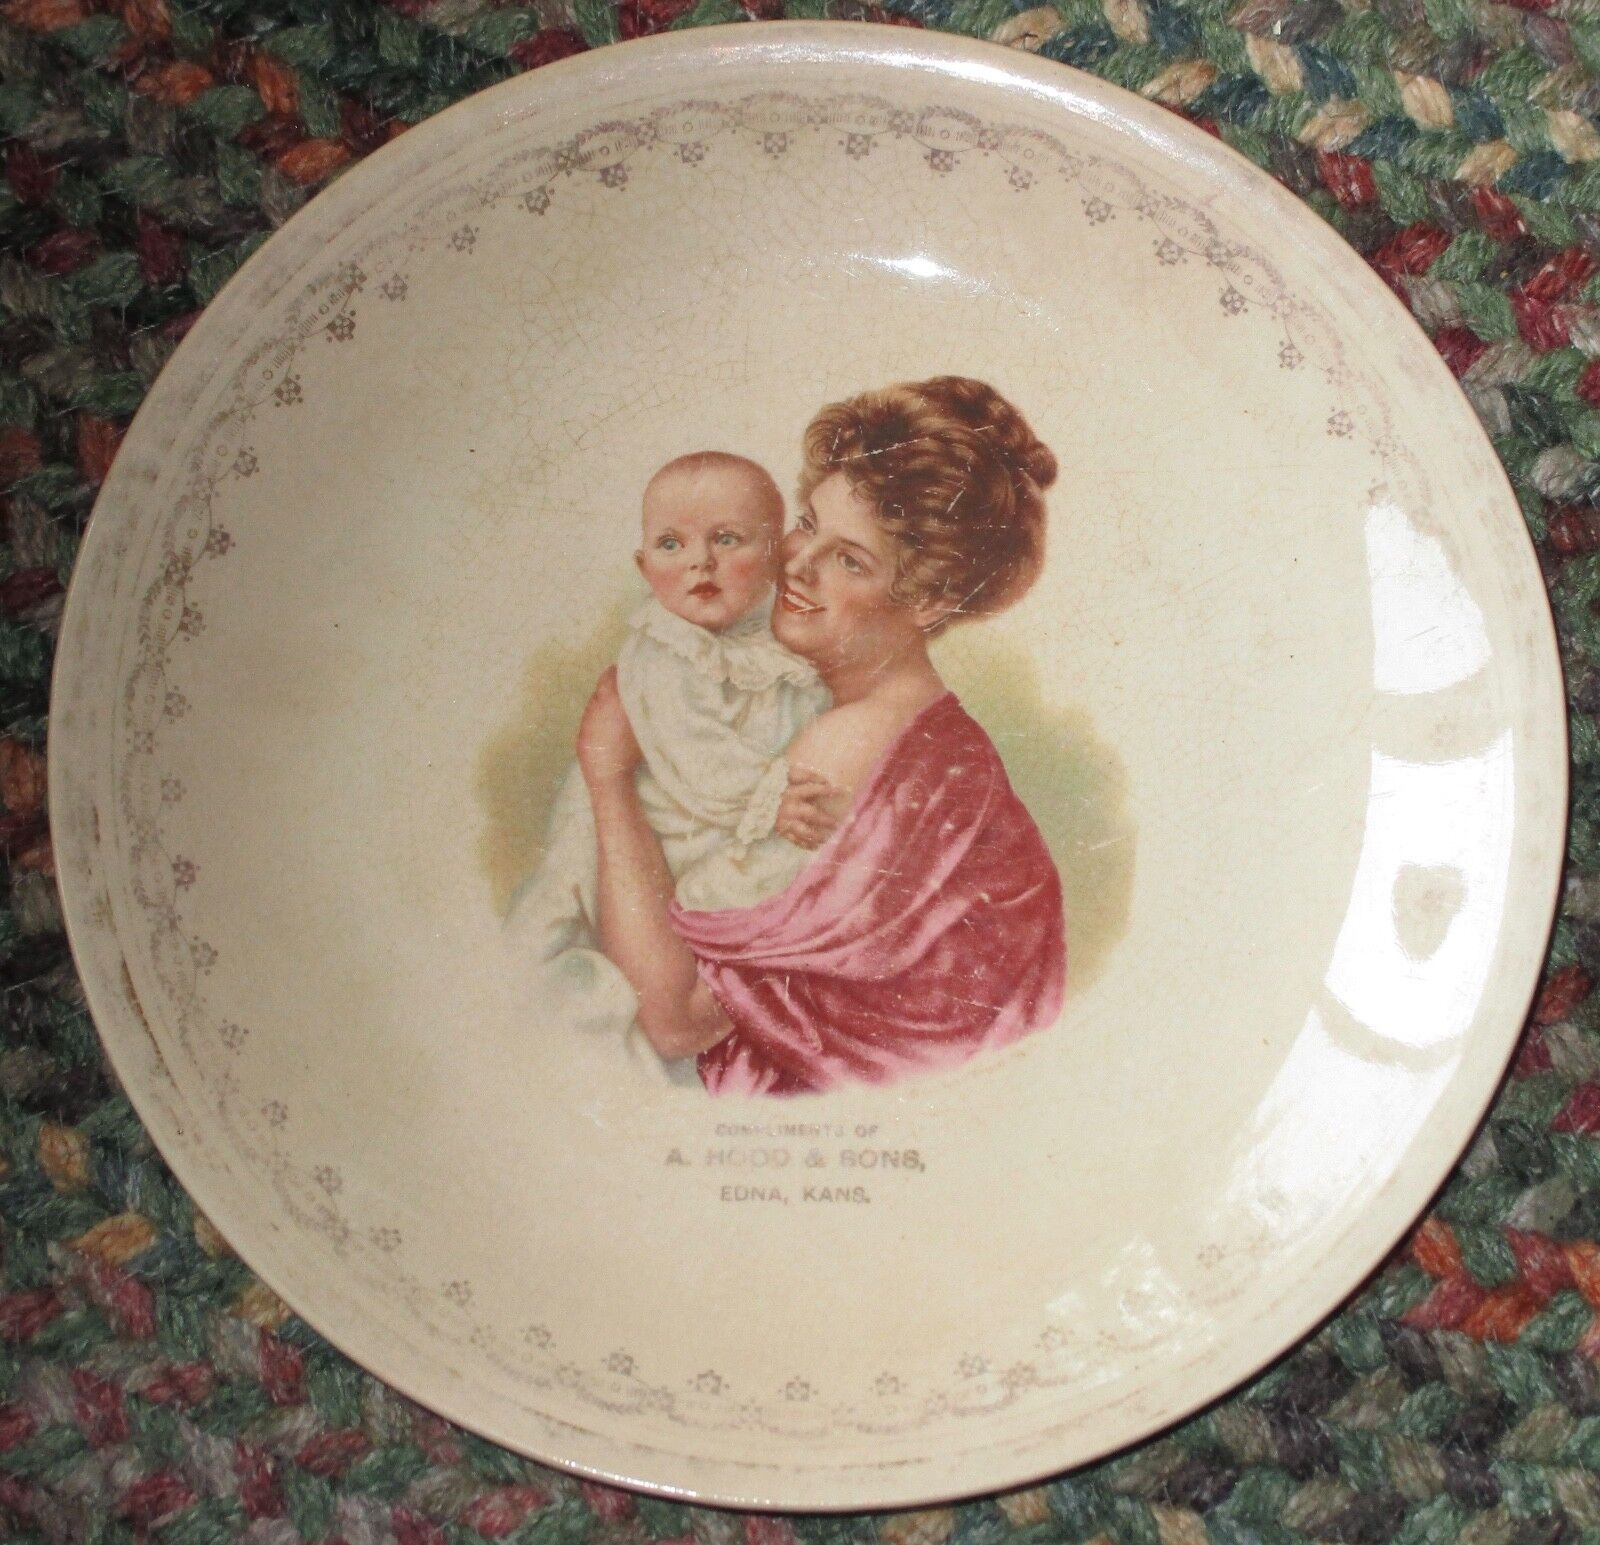 Edna Kansas merchant advertising plate A. Hood mother & child early 1900s